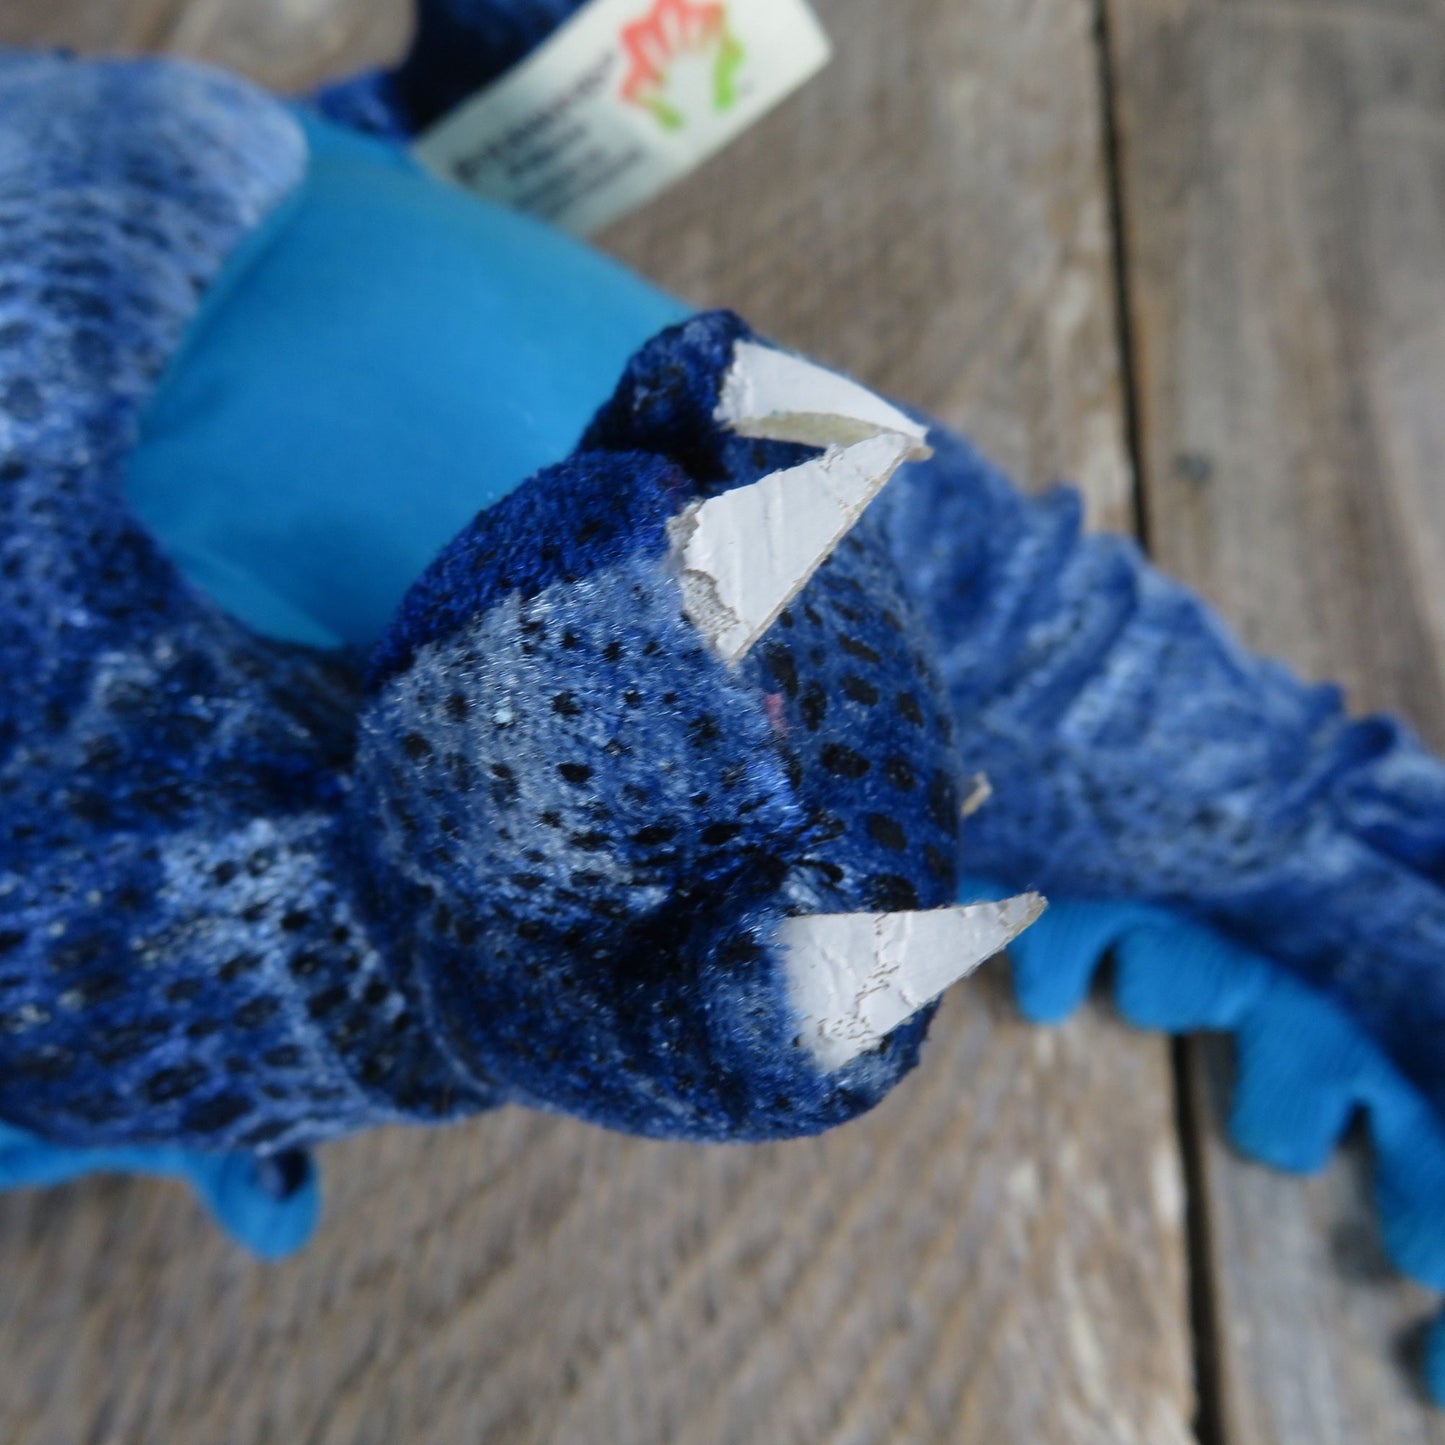 Blue Dragon Puppet Plush 3 Headed Folkmanis Magical Fantasy Full Body Stuffed Animal